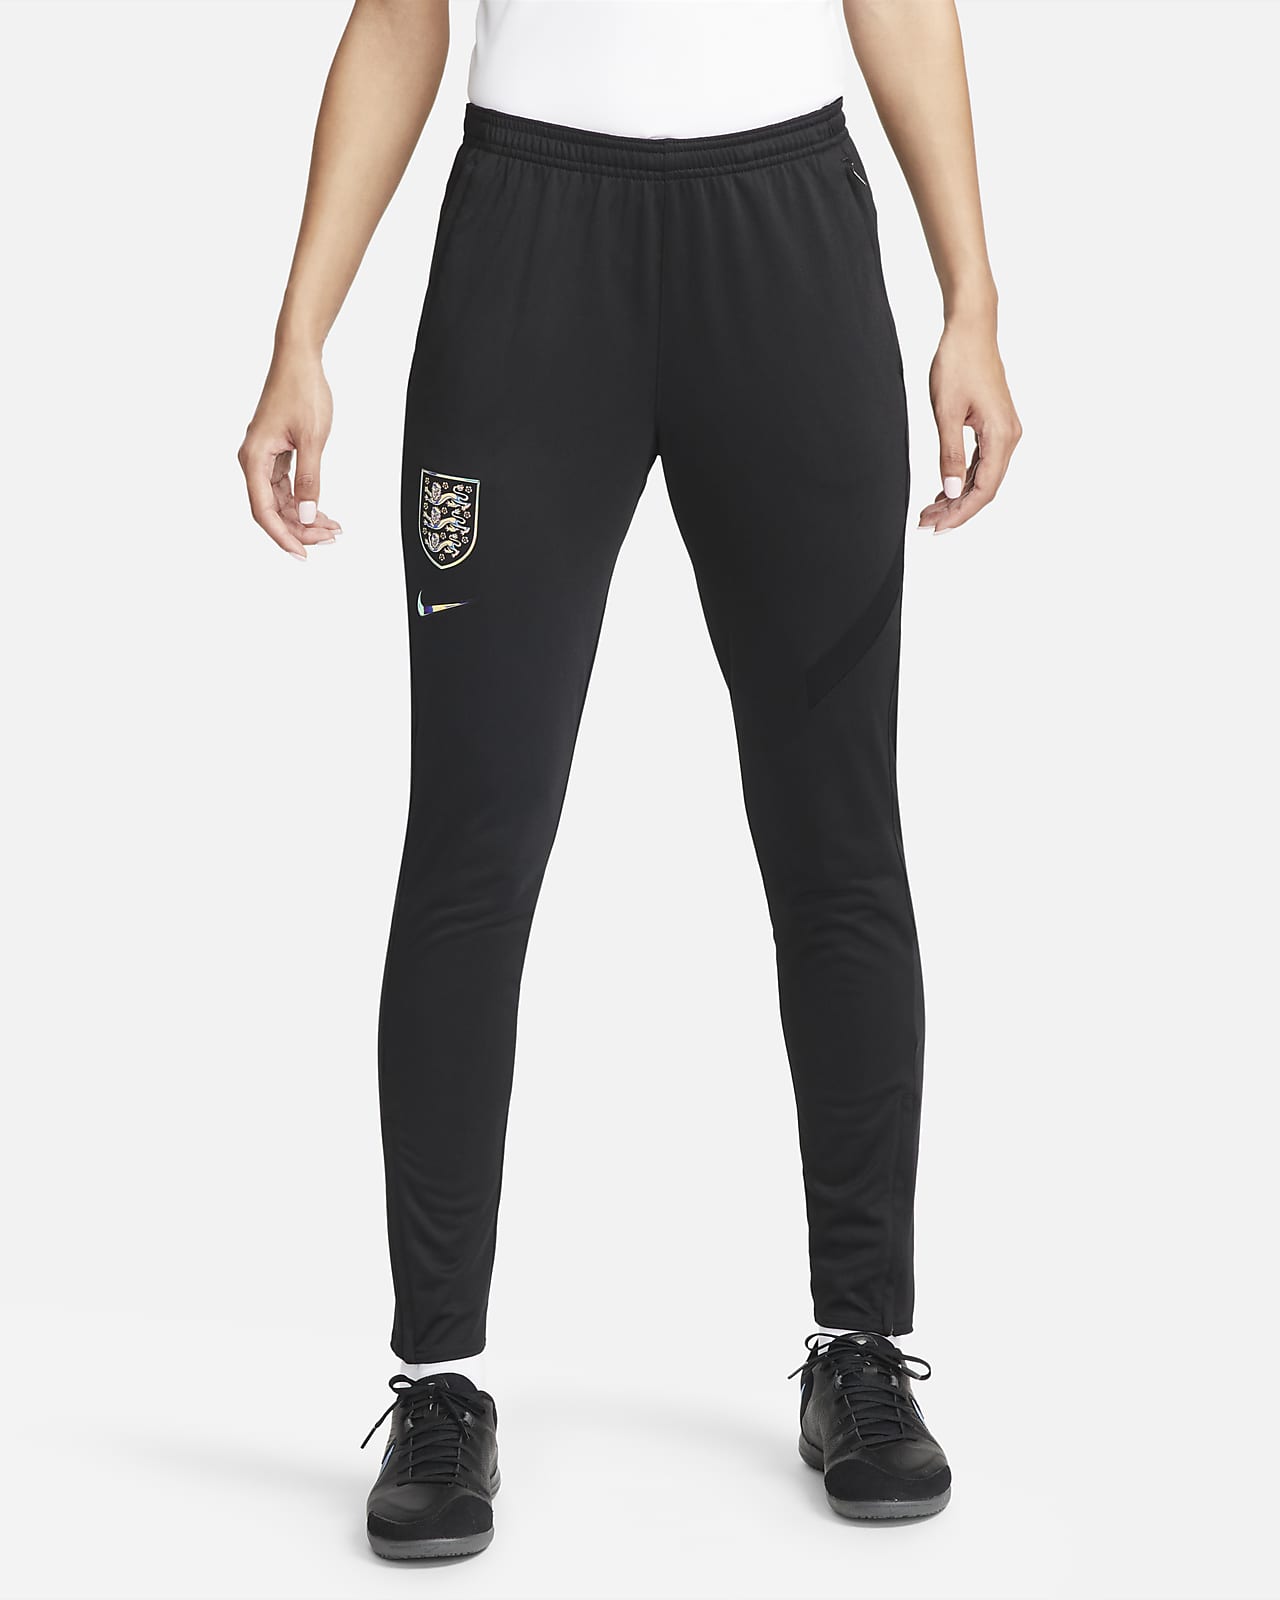 England Academy Pro Women's Nike Dri-FIT Football Pants